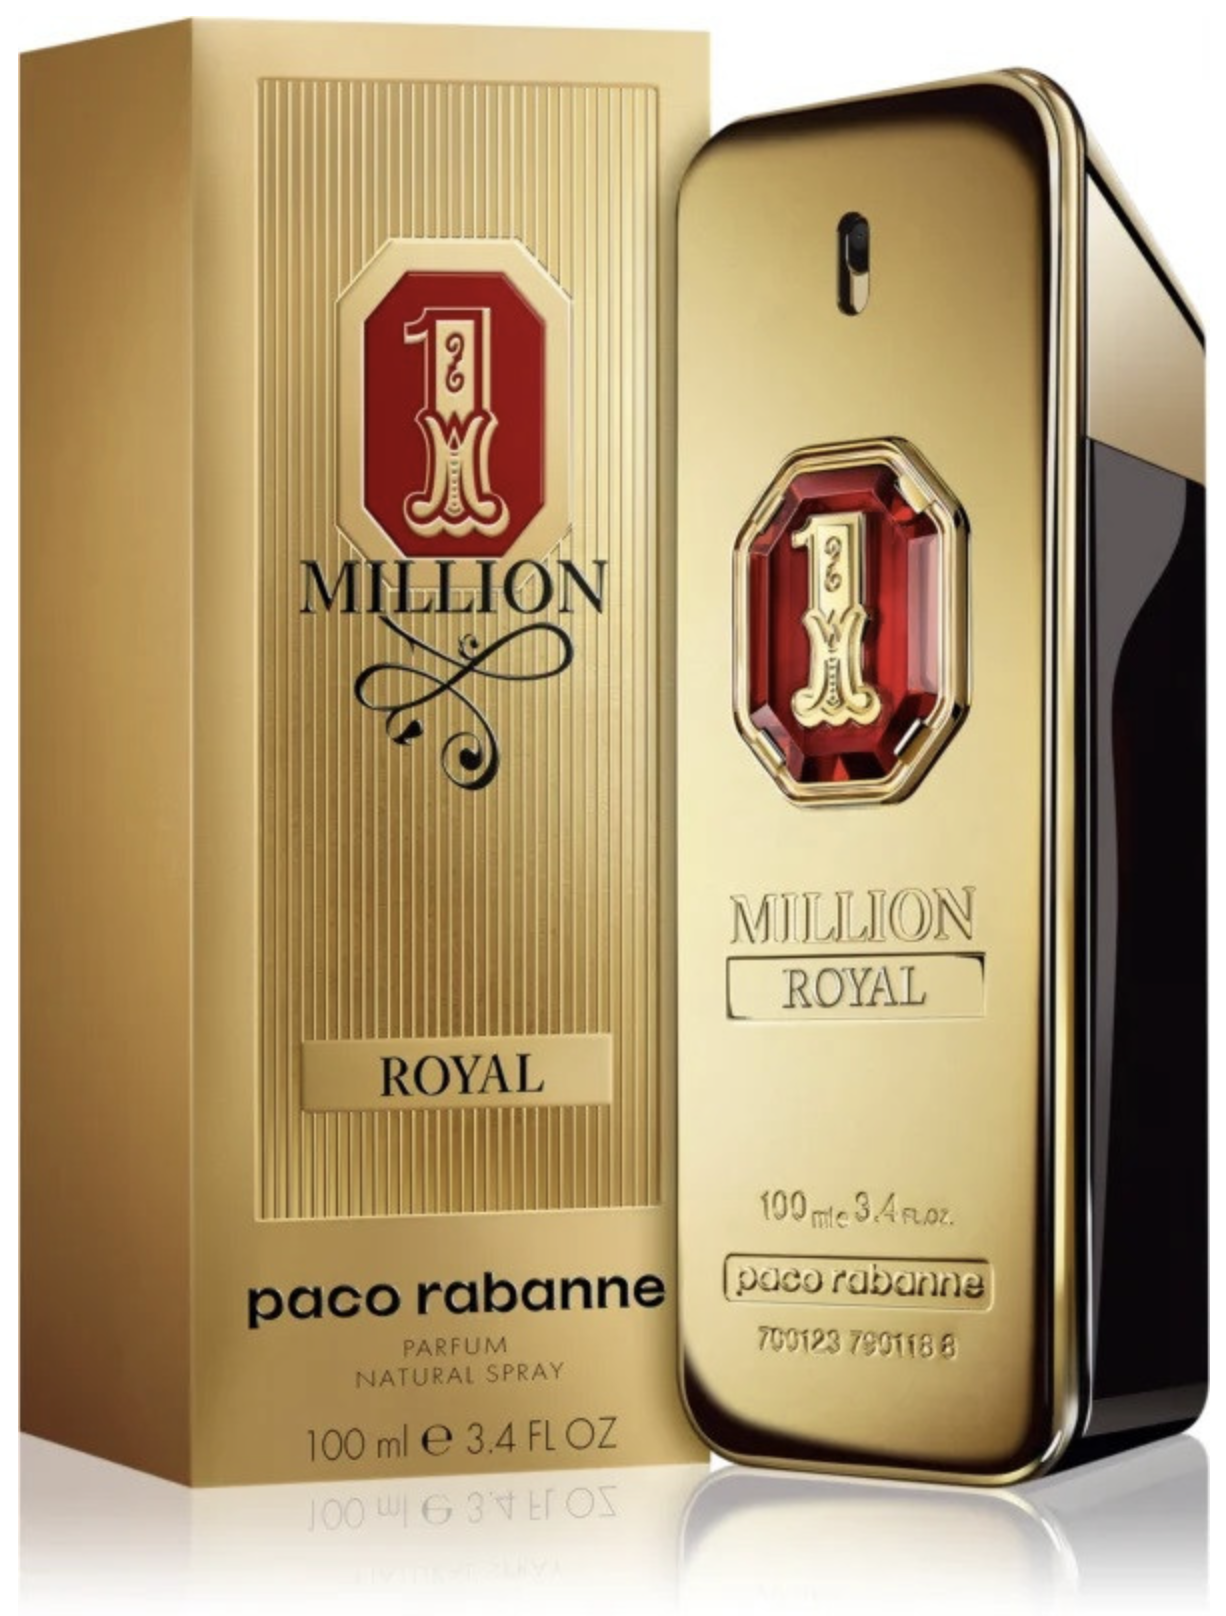 PACO RABANNE 1 MILLION ROYAL PARFUM 100ML SPRAY